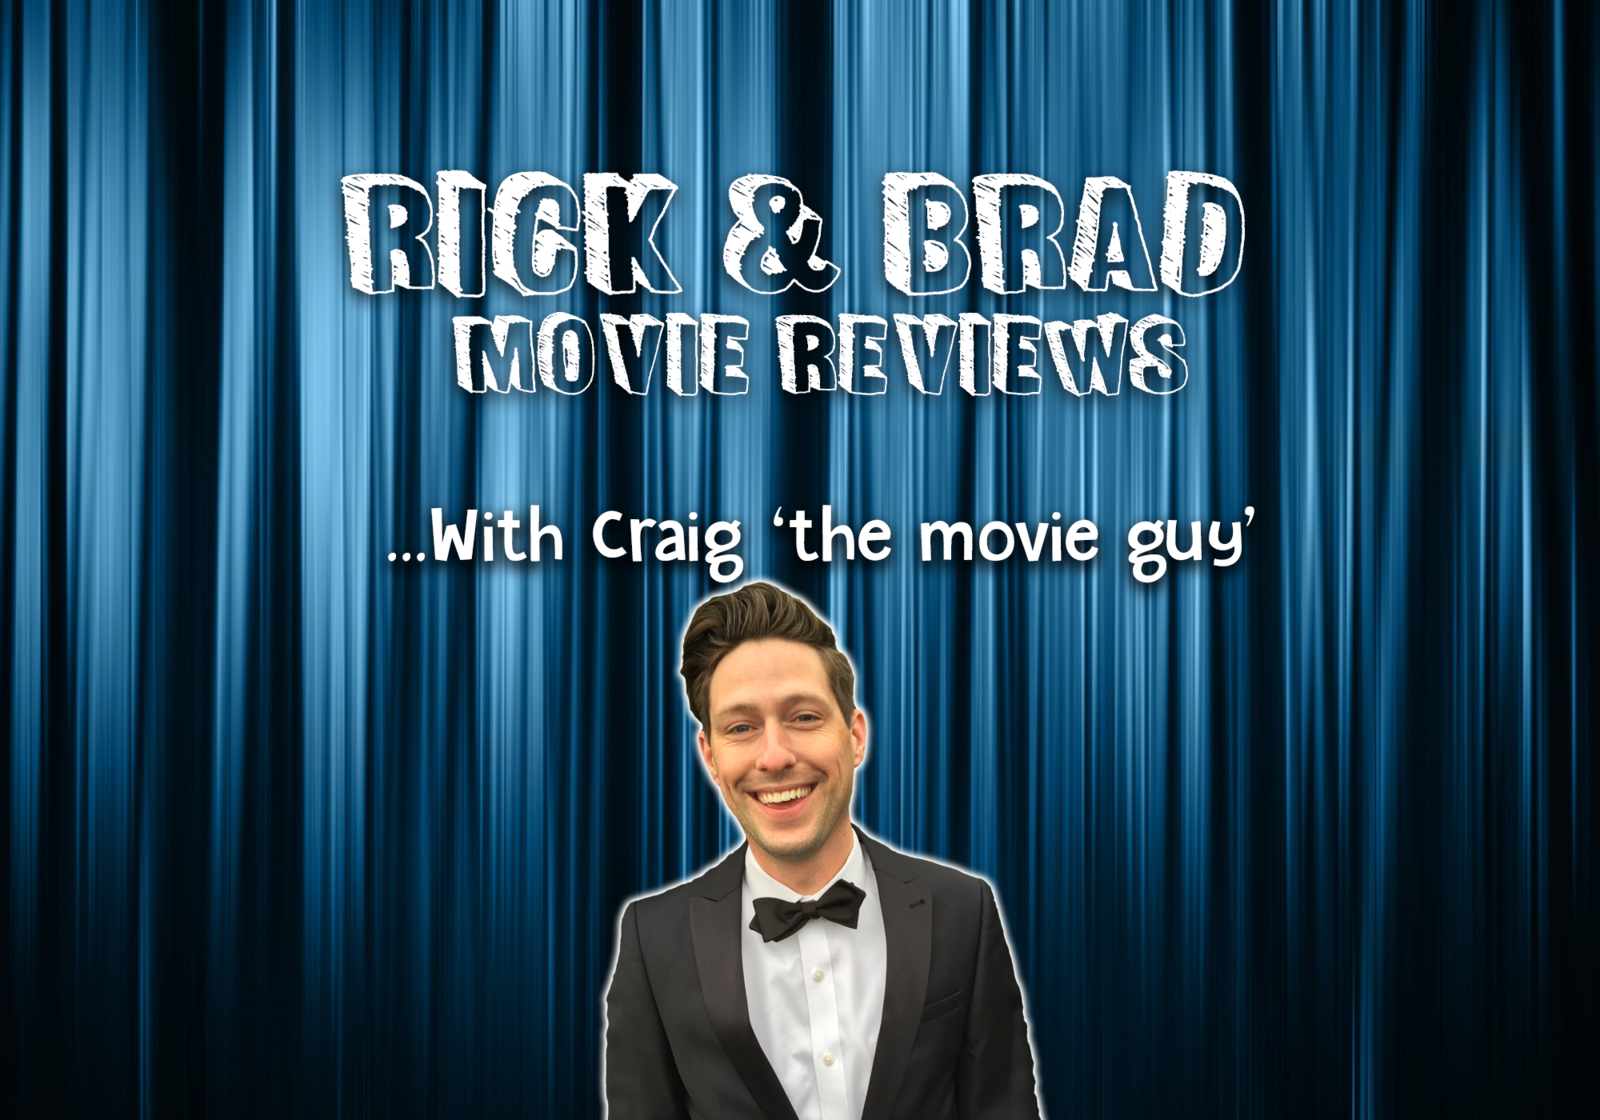 05-14 Movie Reviews with Craig 'The Movie Guy'